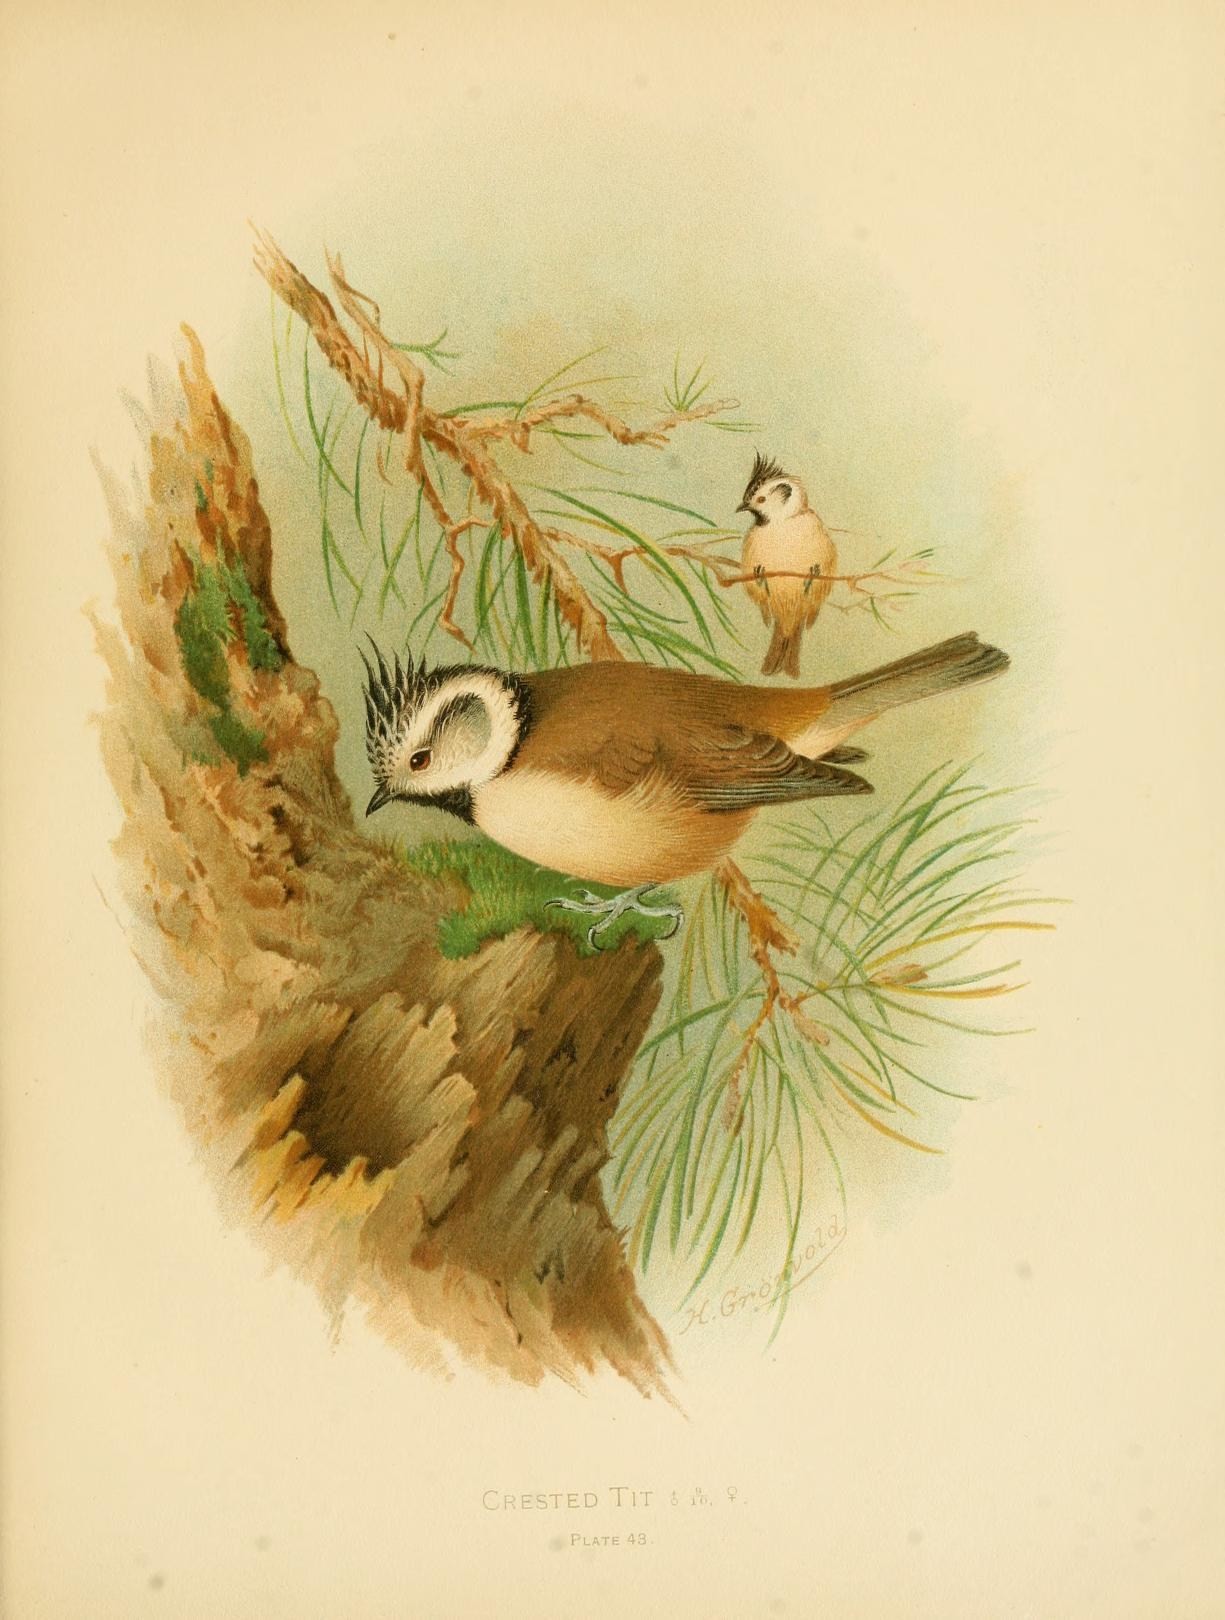 a drawing of birds sitting on a tree limb